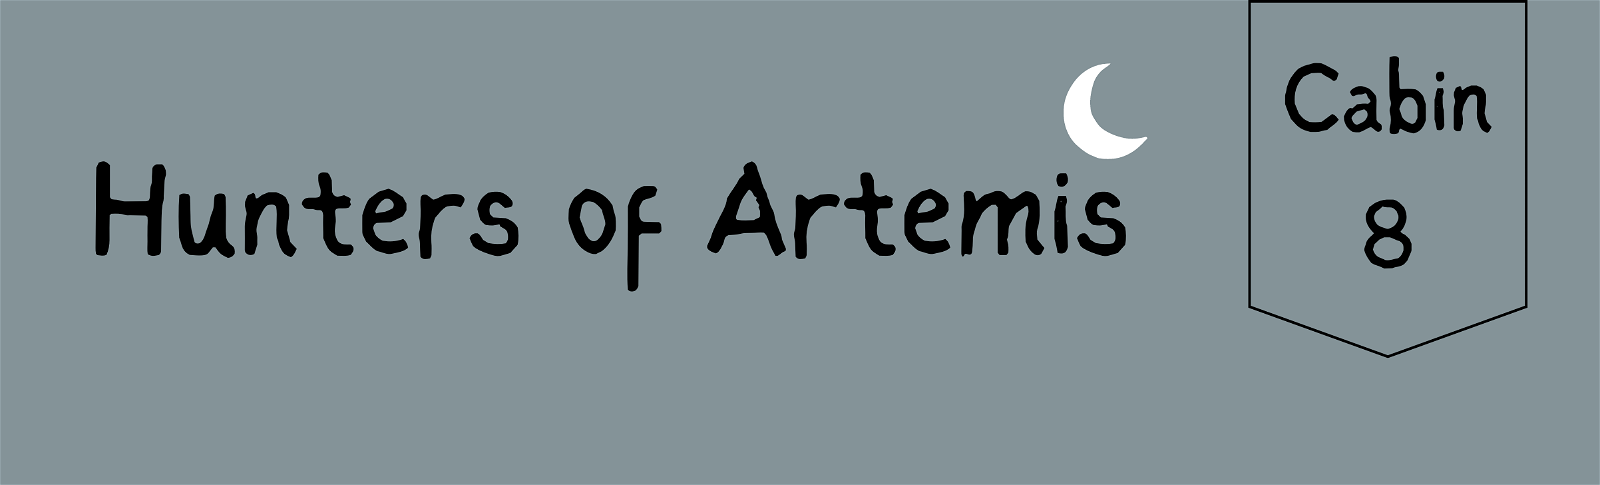 Hunters of Artemis